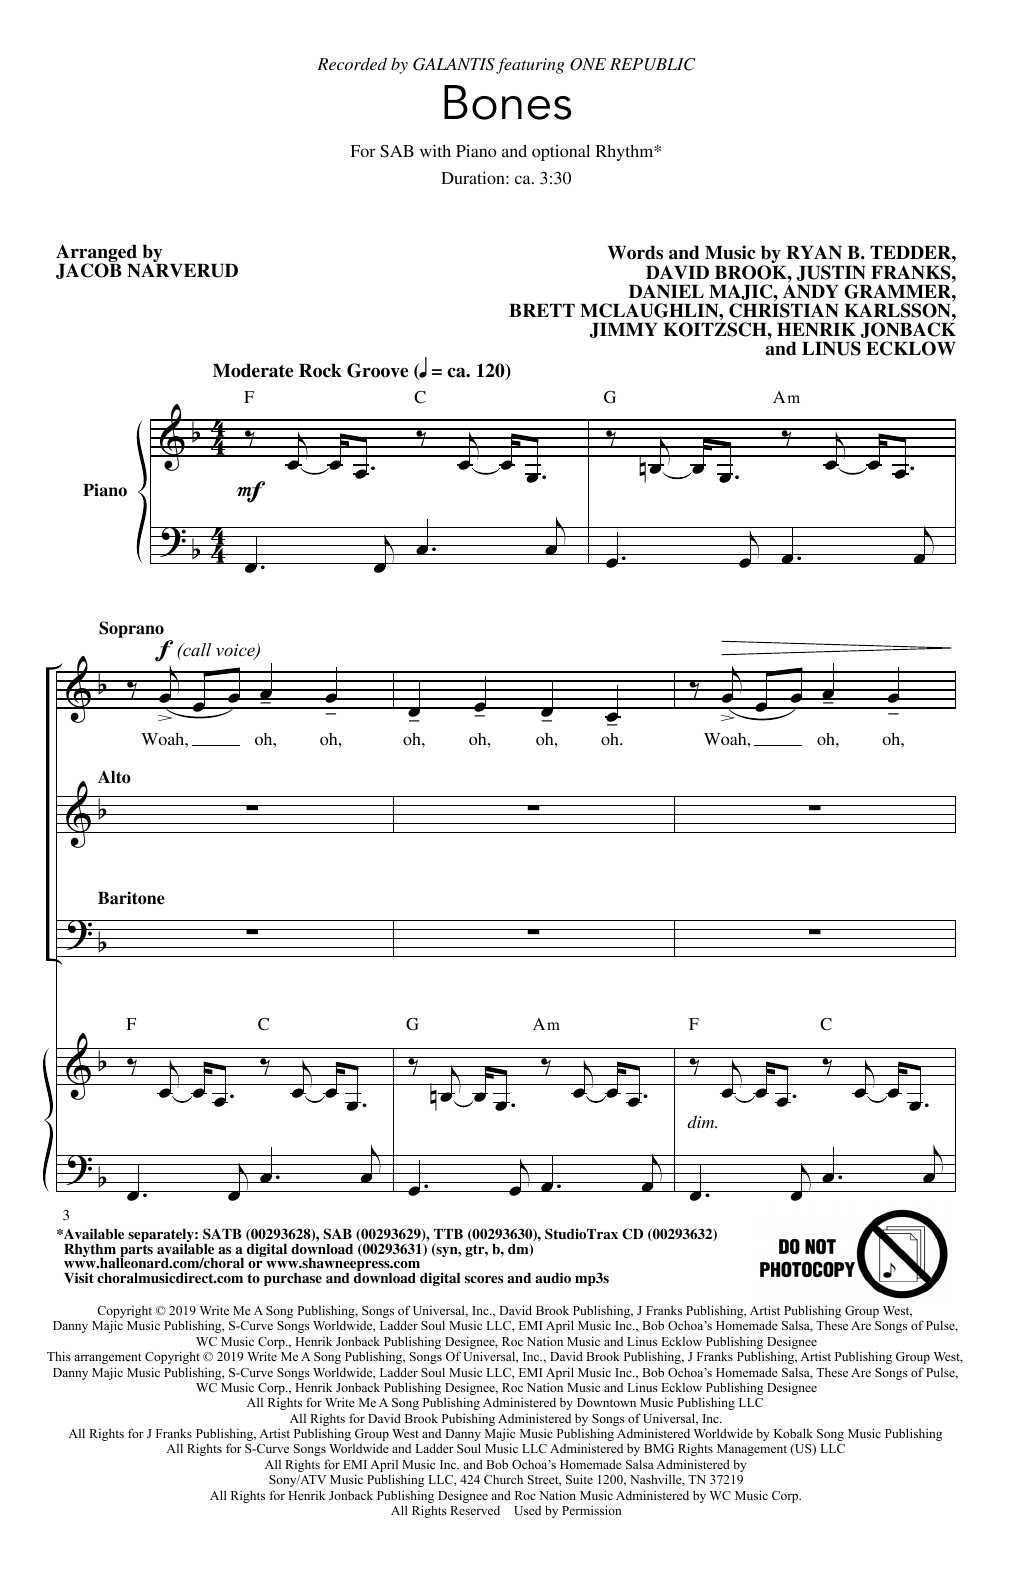 Galantis Bones (feat. OneRepublic) (arr. Jacob Narverud) Sheet Music Notes & Chords for SAB Choir - Download or Print PDF